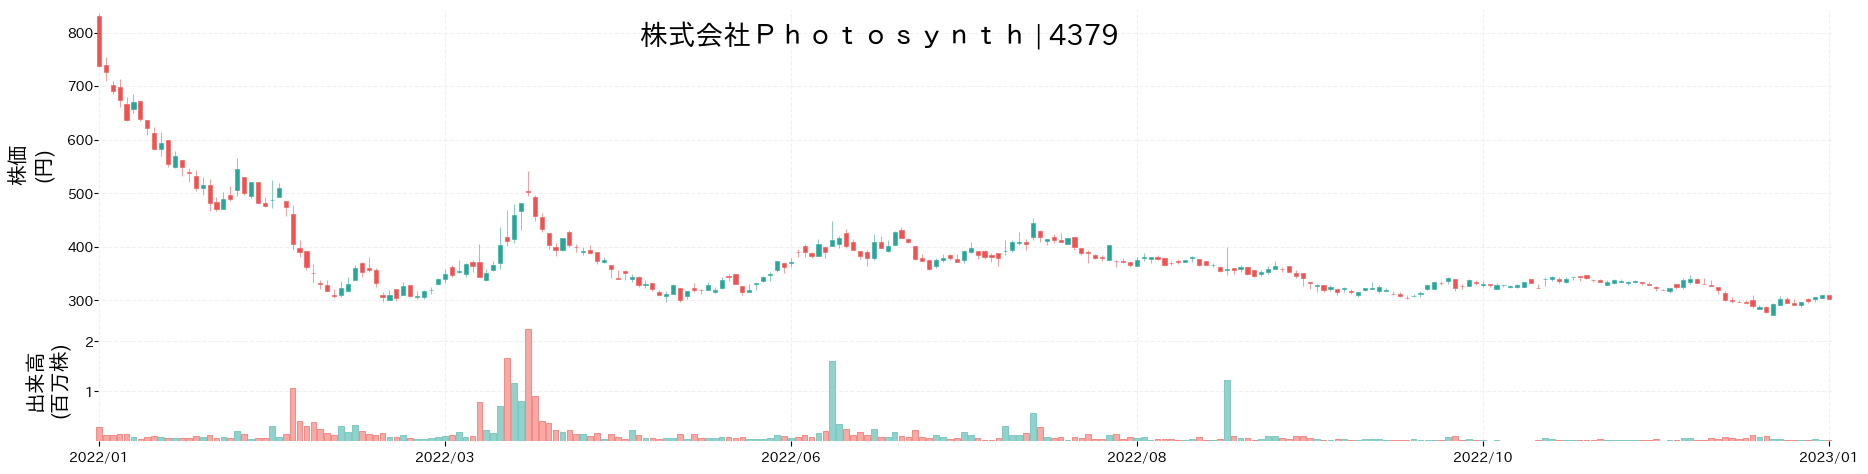 Photosynthの株価推移(2022)